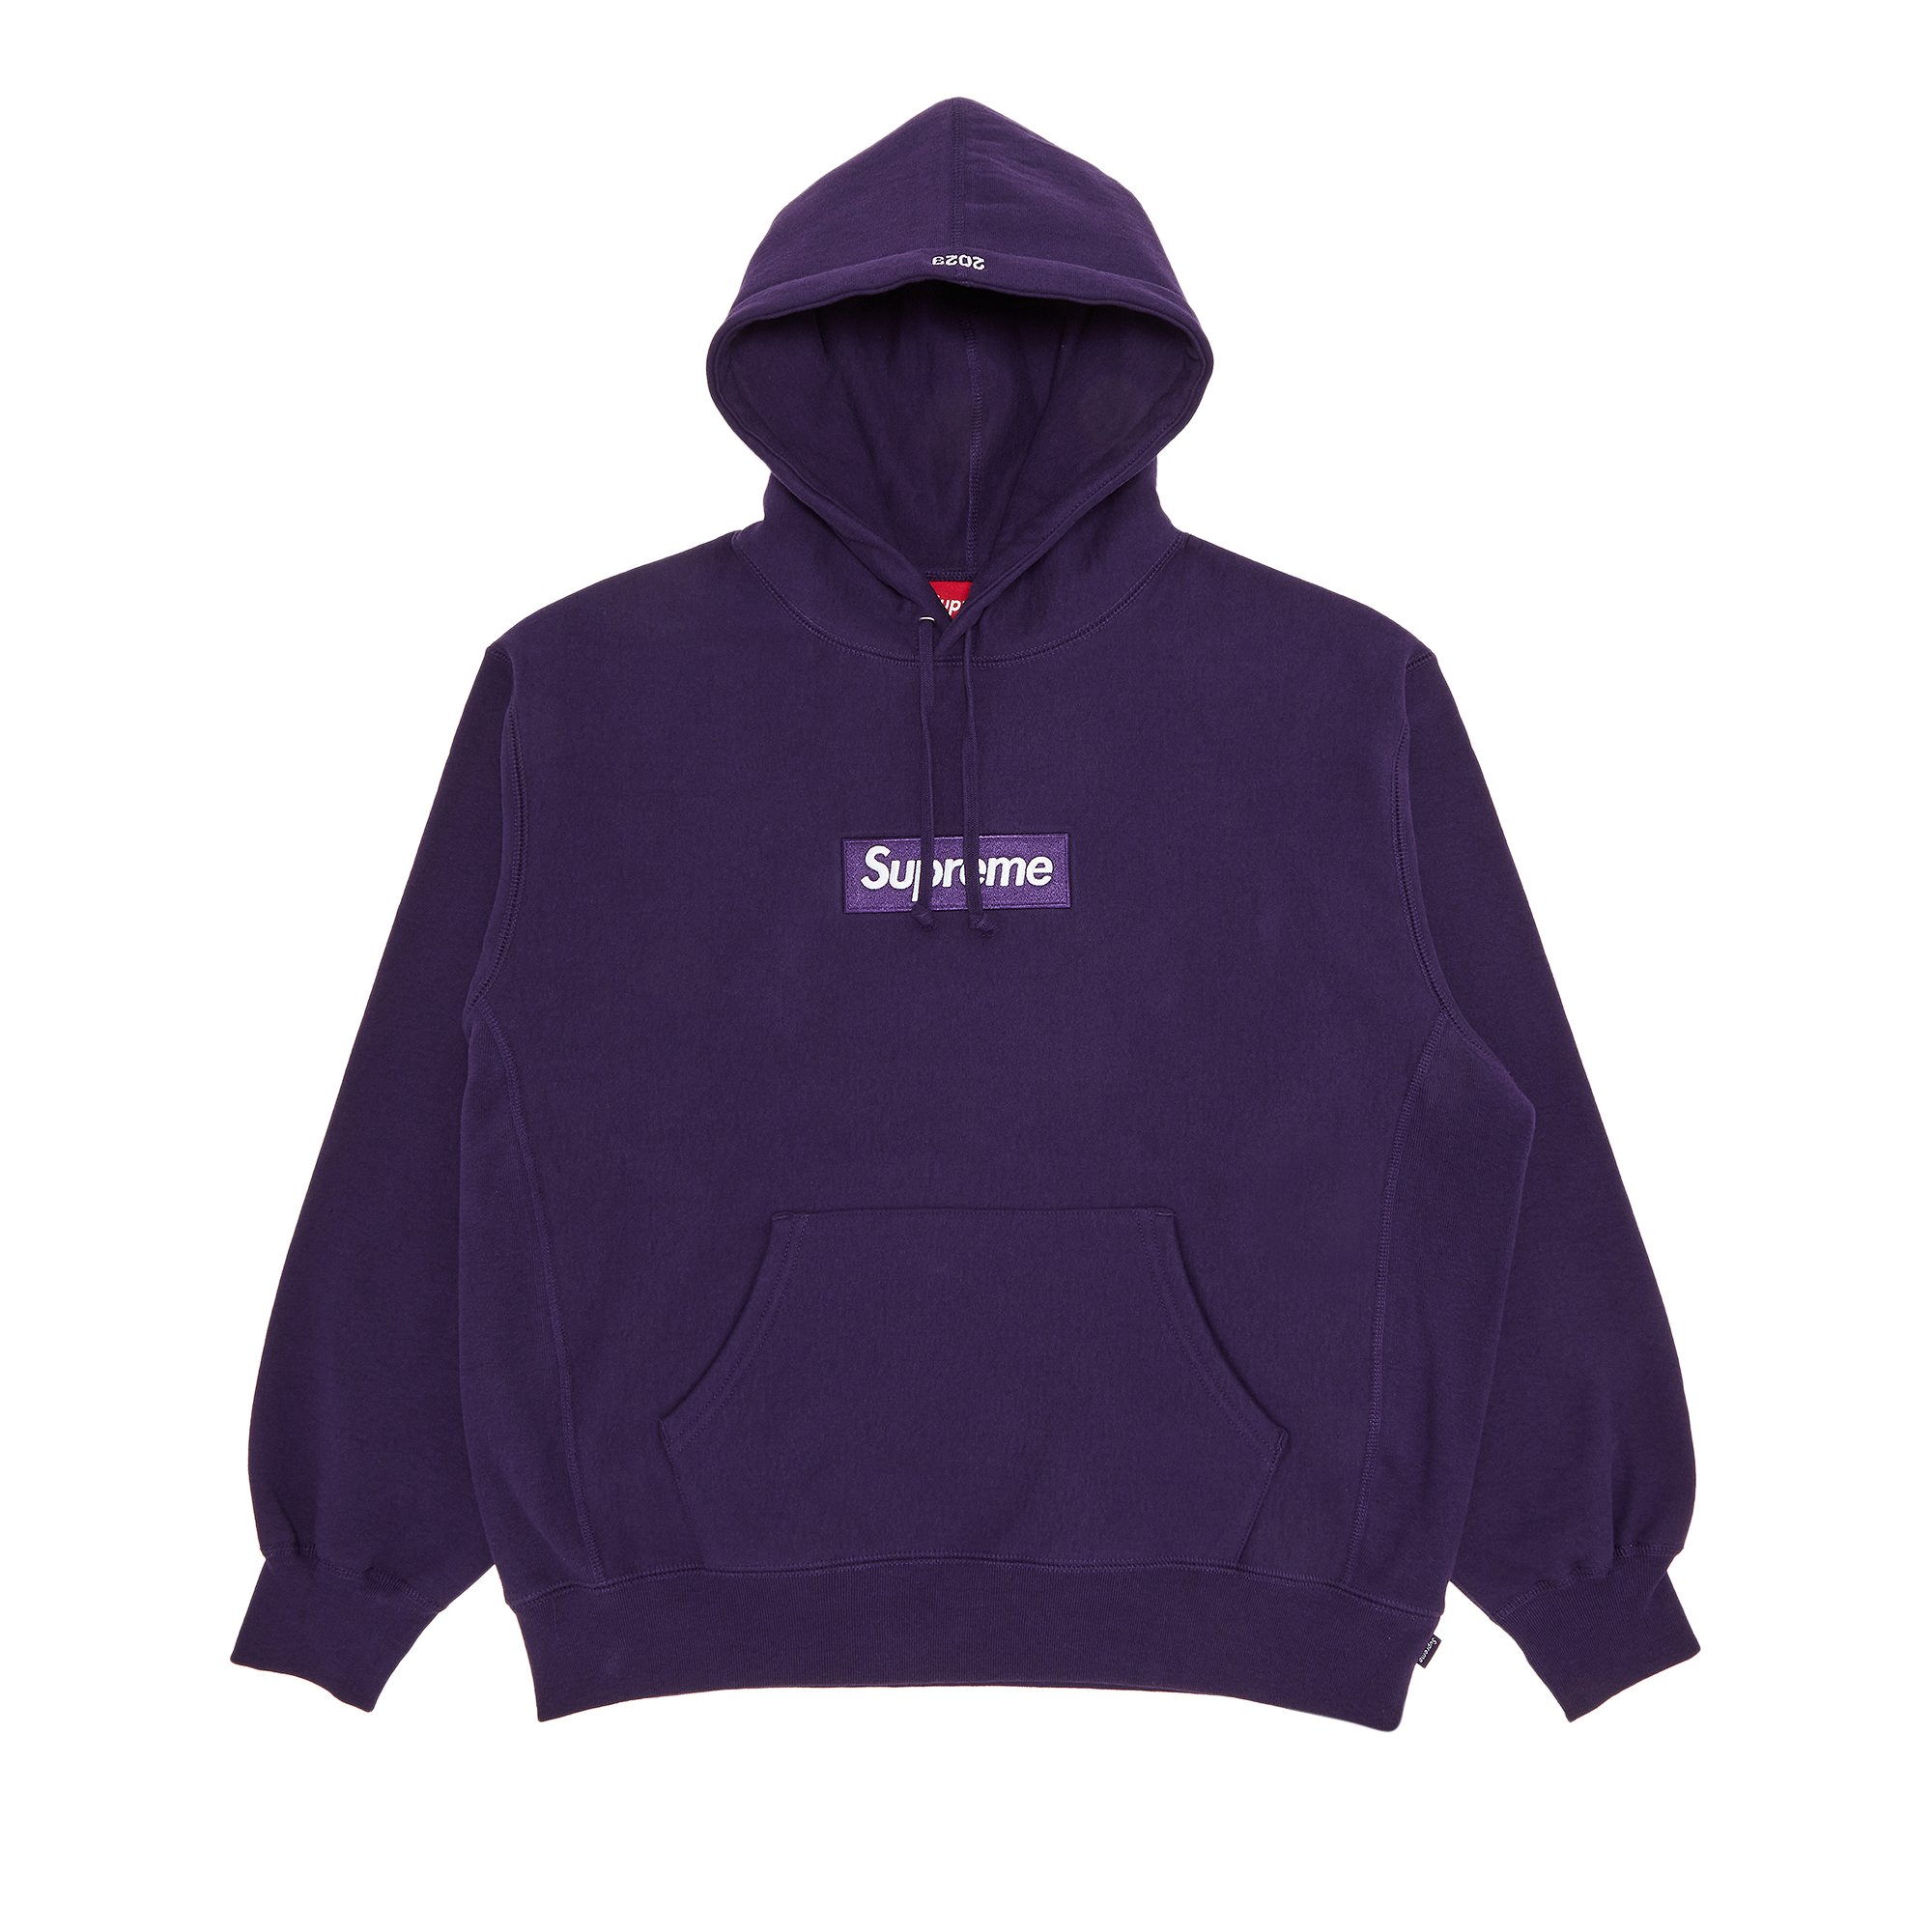 coloSupreme Box Logo Hooded dark purple